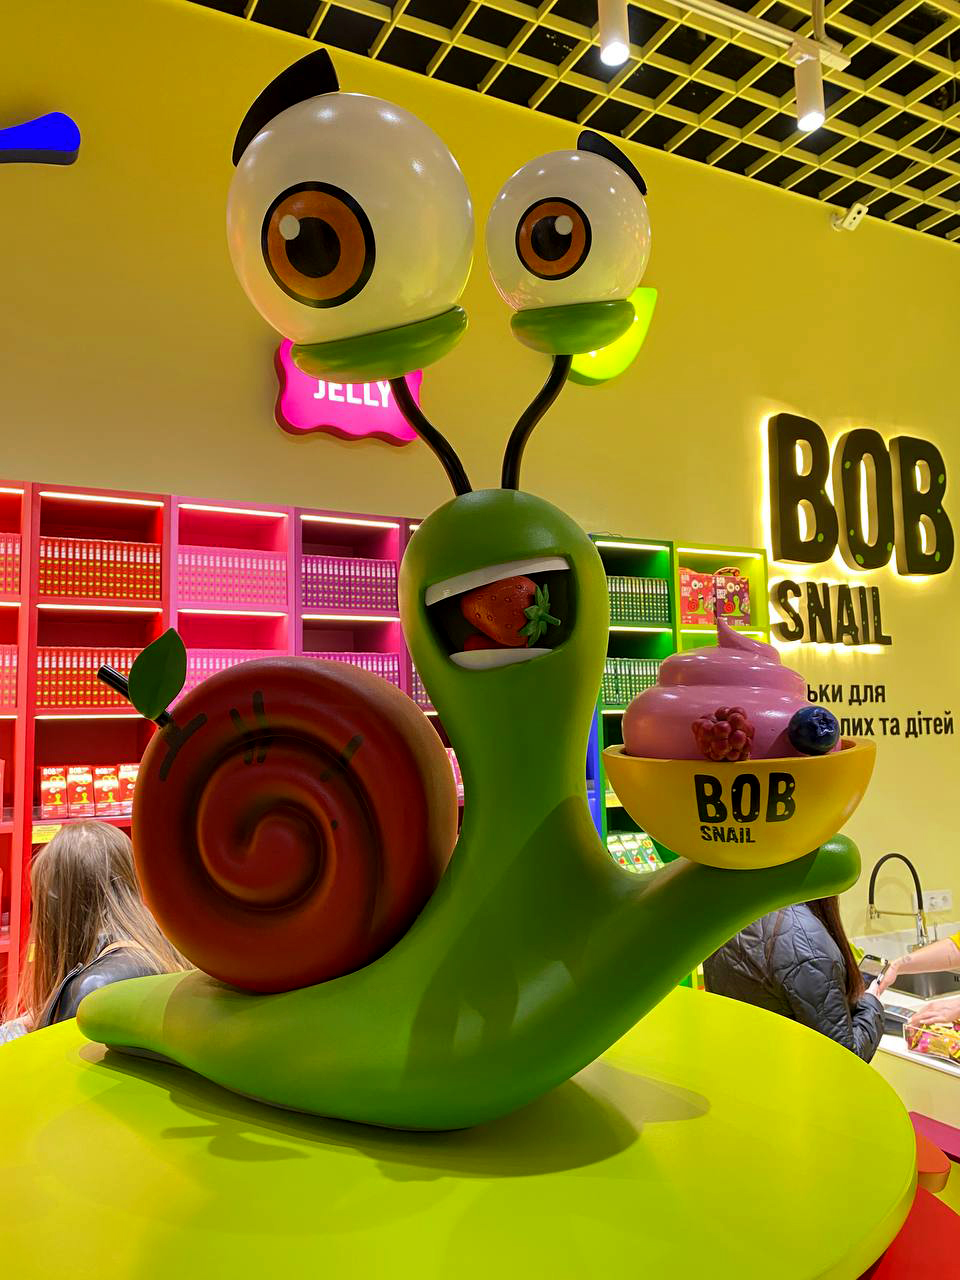 Bob Snail is a Ukrainian brand of healthy sweets